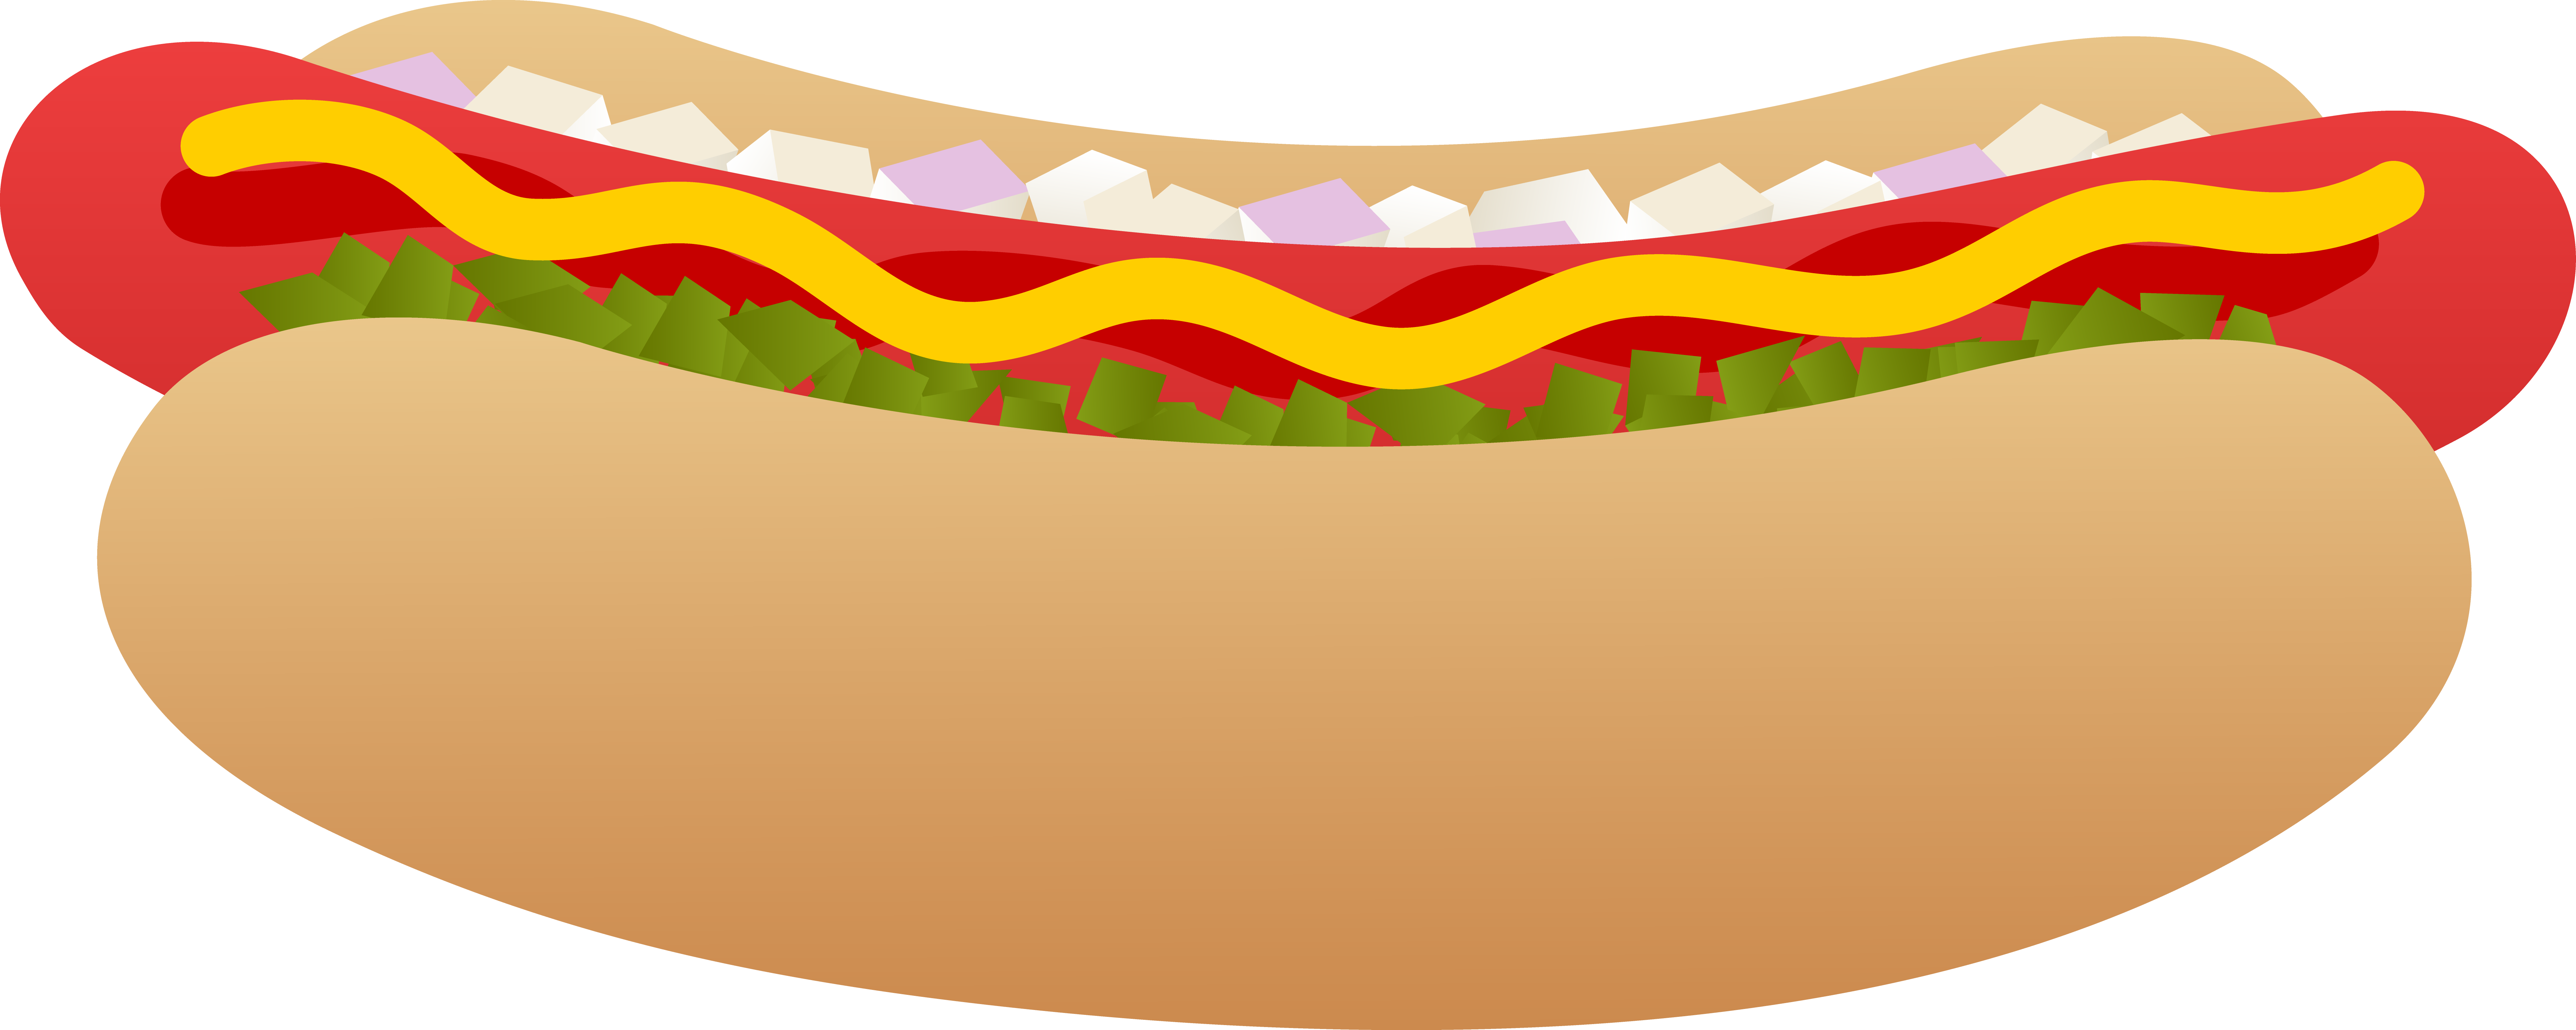 Best Hot Dog Clipart